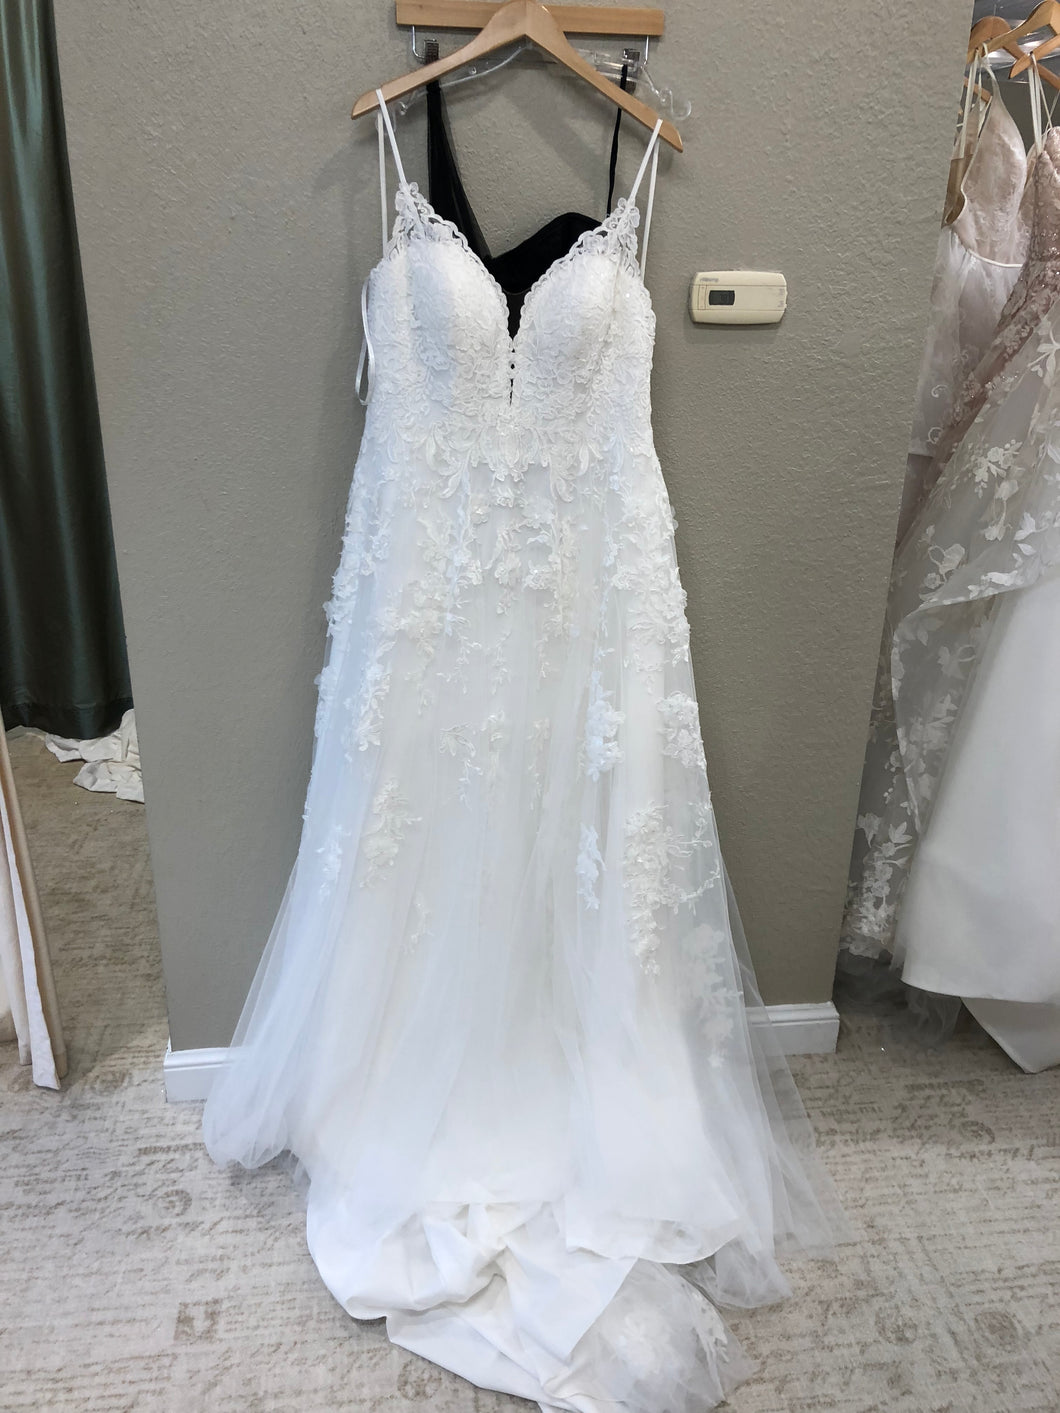 Essence of Australia 'D2453' size 20 new wedding dress front view on hanger